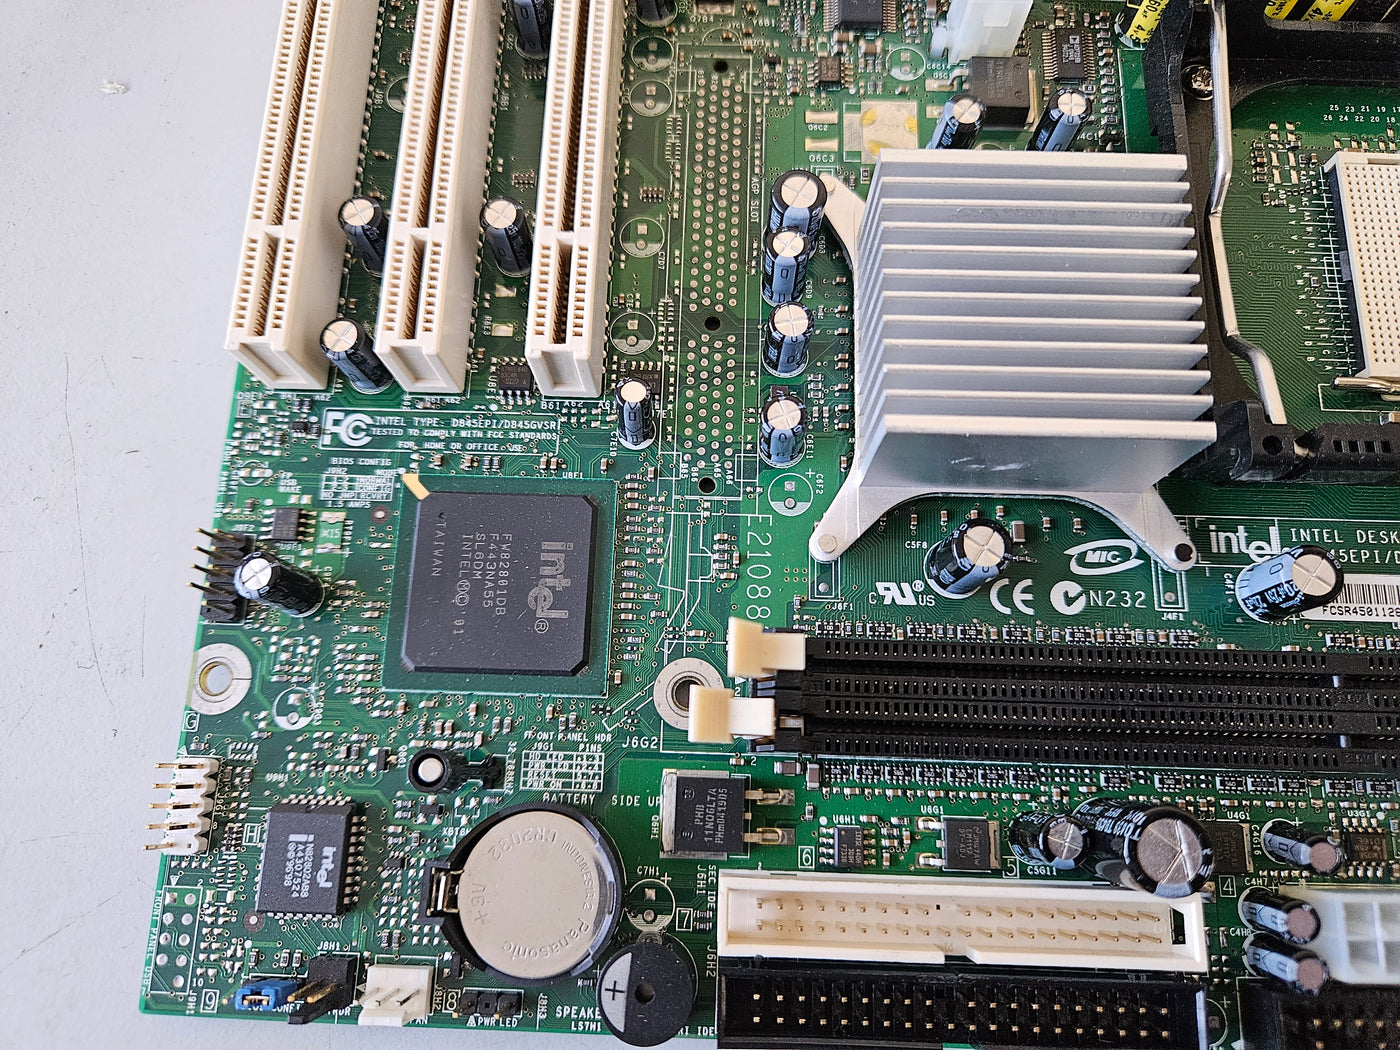 Intel E210882 DDR Micro-ATX Socket 478 System Motherboard ( D845EPI D845GVSR C45439-302 ) USED